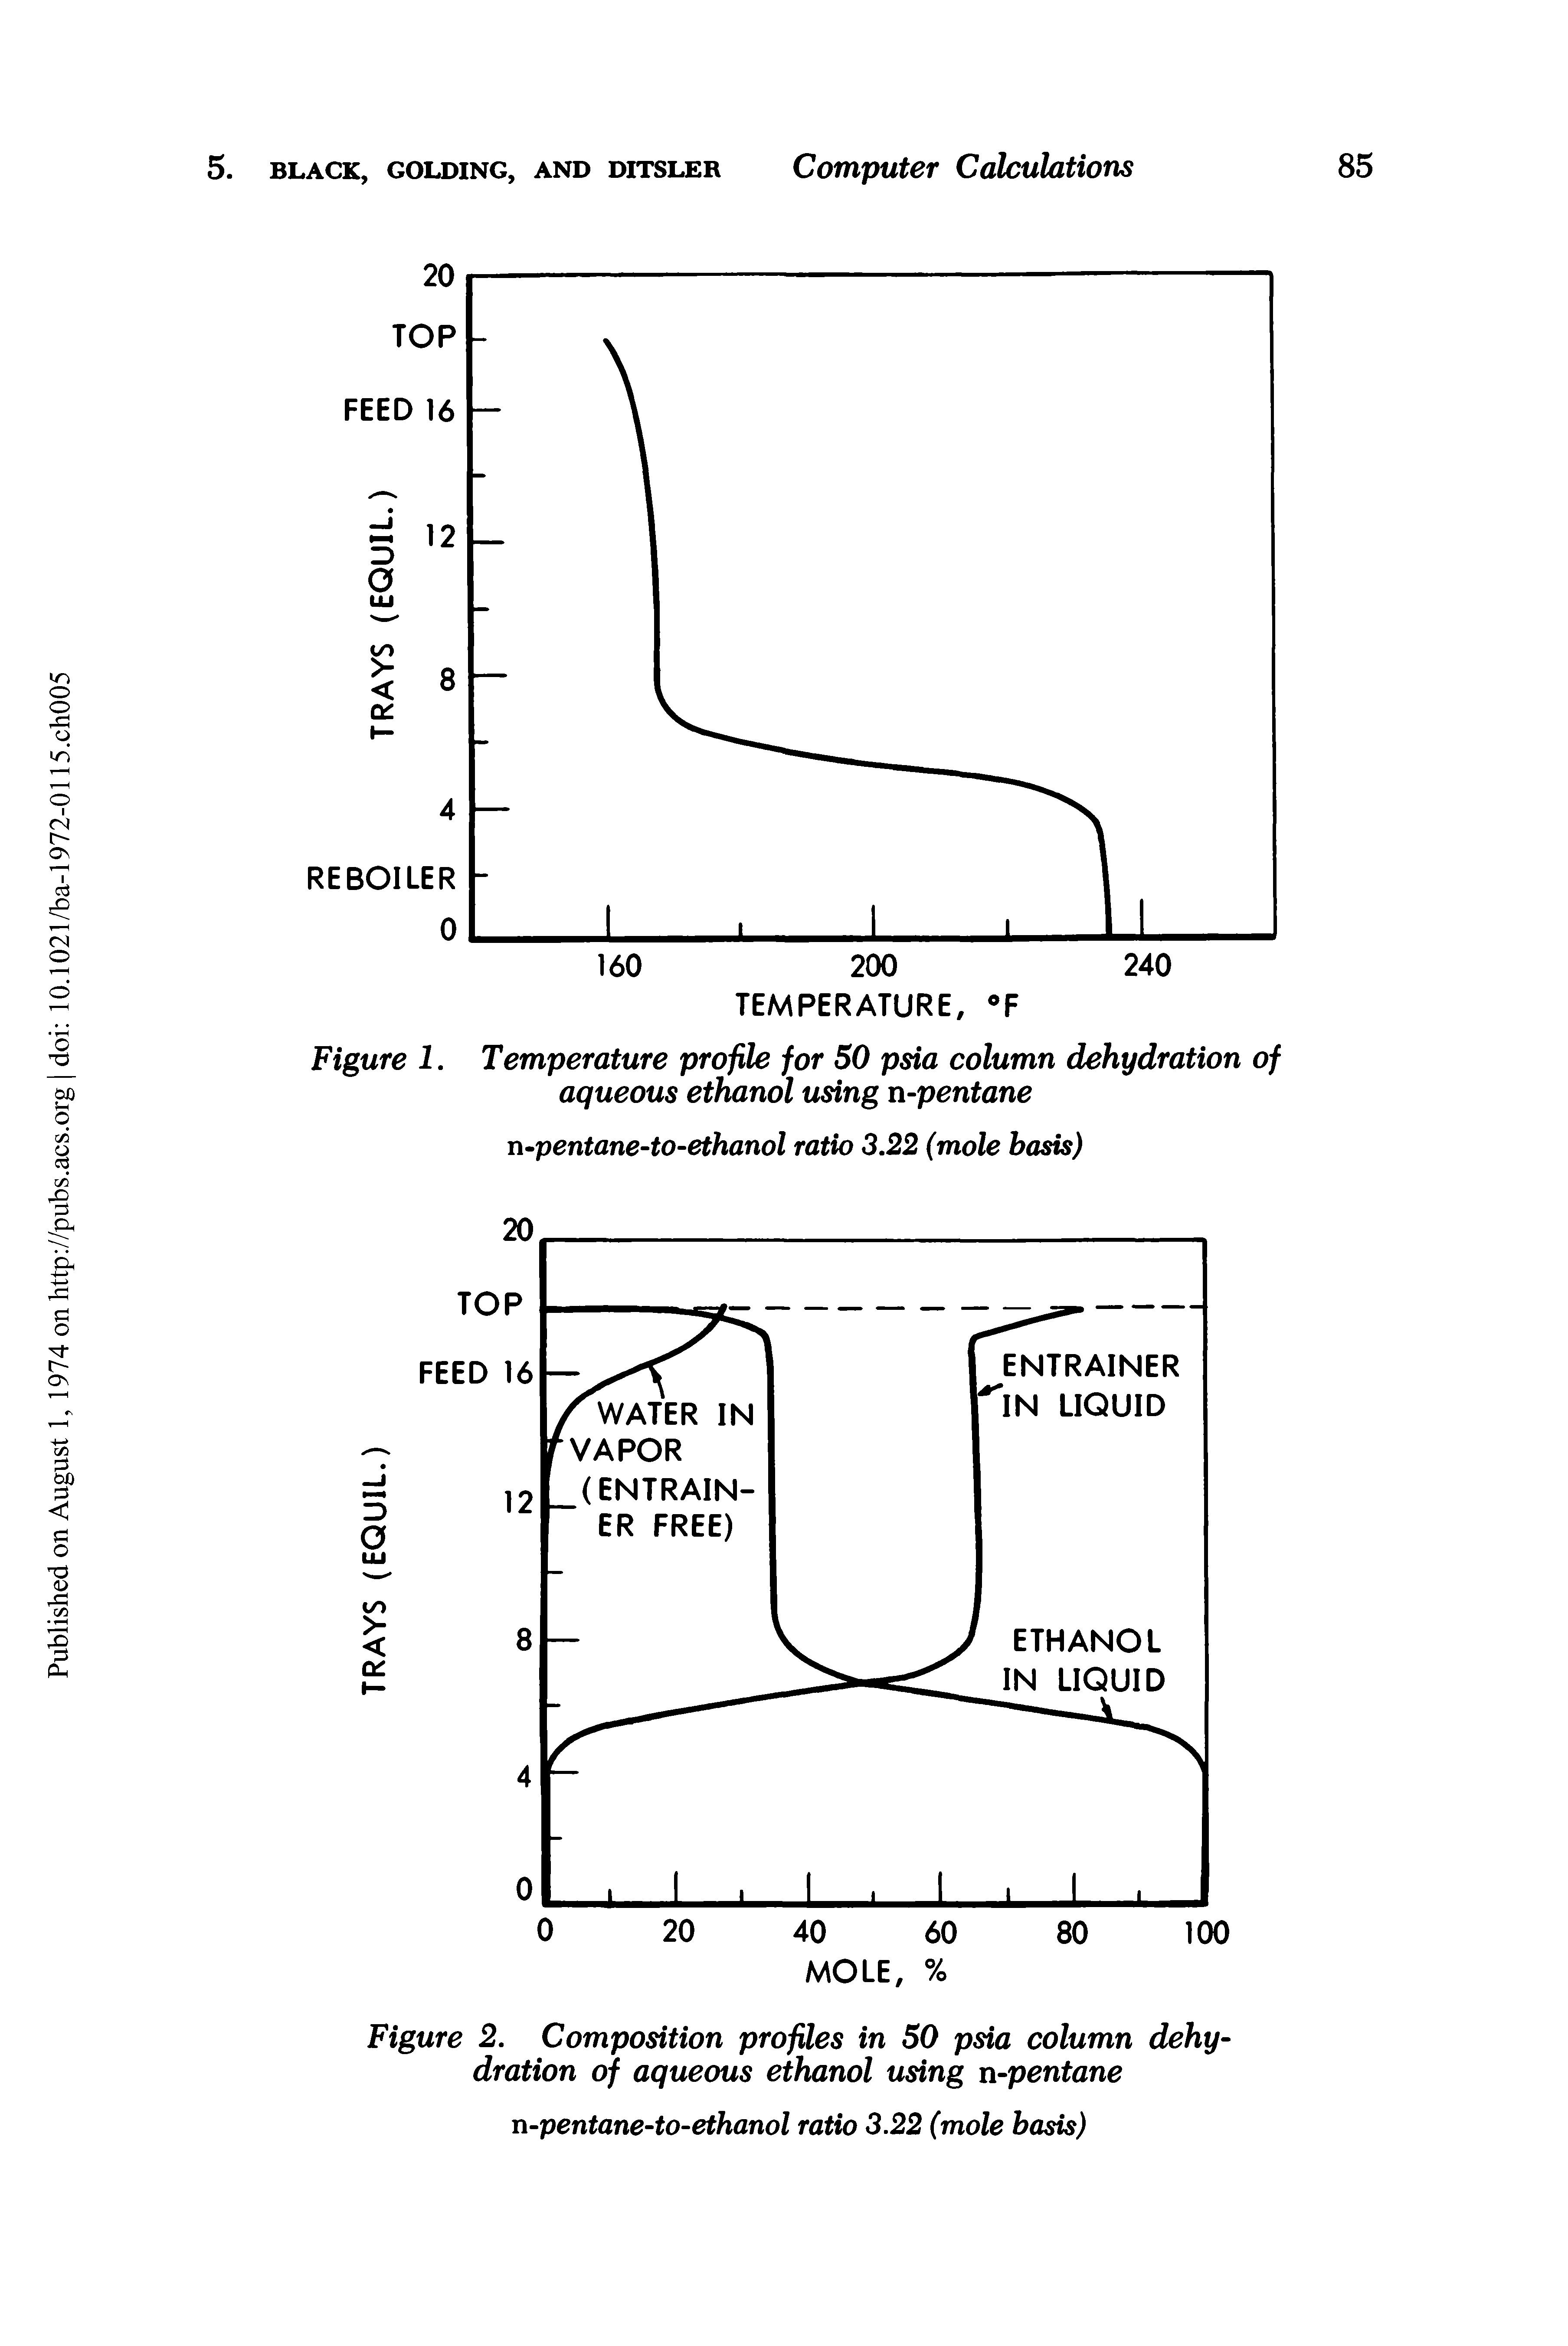 Figure 1. Temperature profile for 50 psia column dehydration of aqueous ethanol using n-pentane...